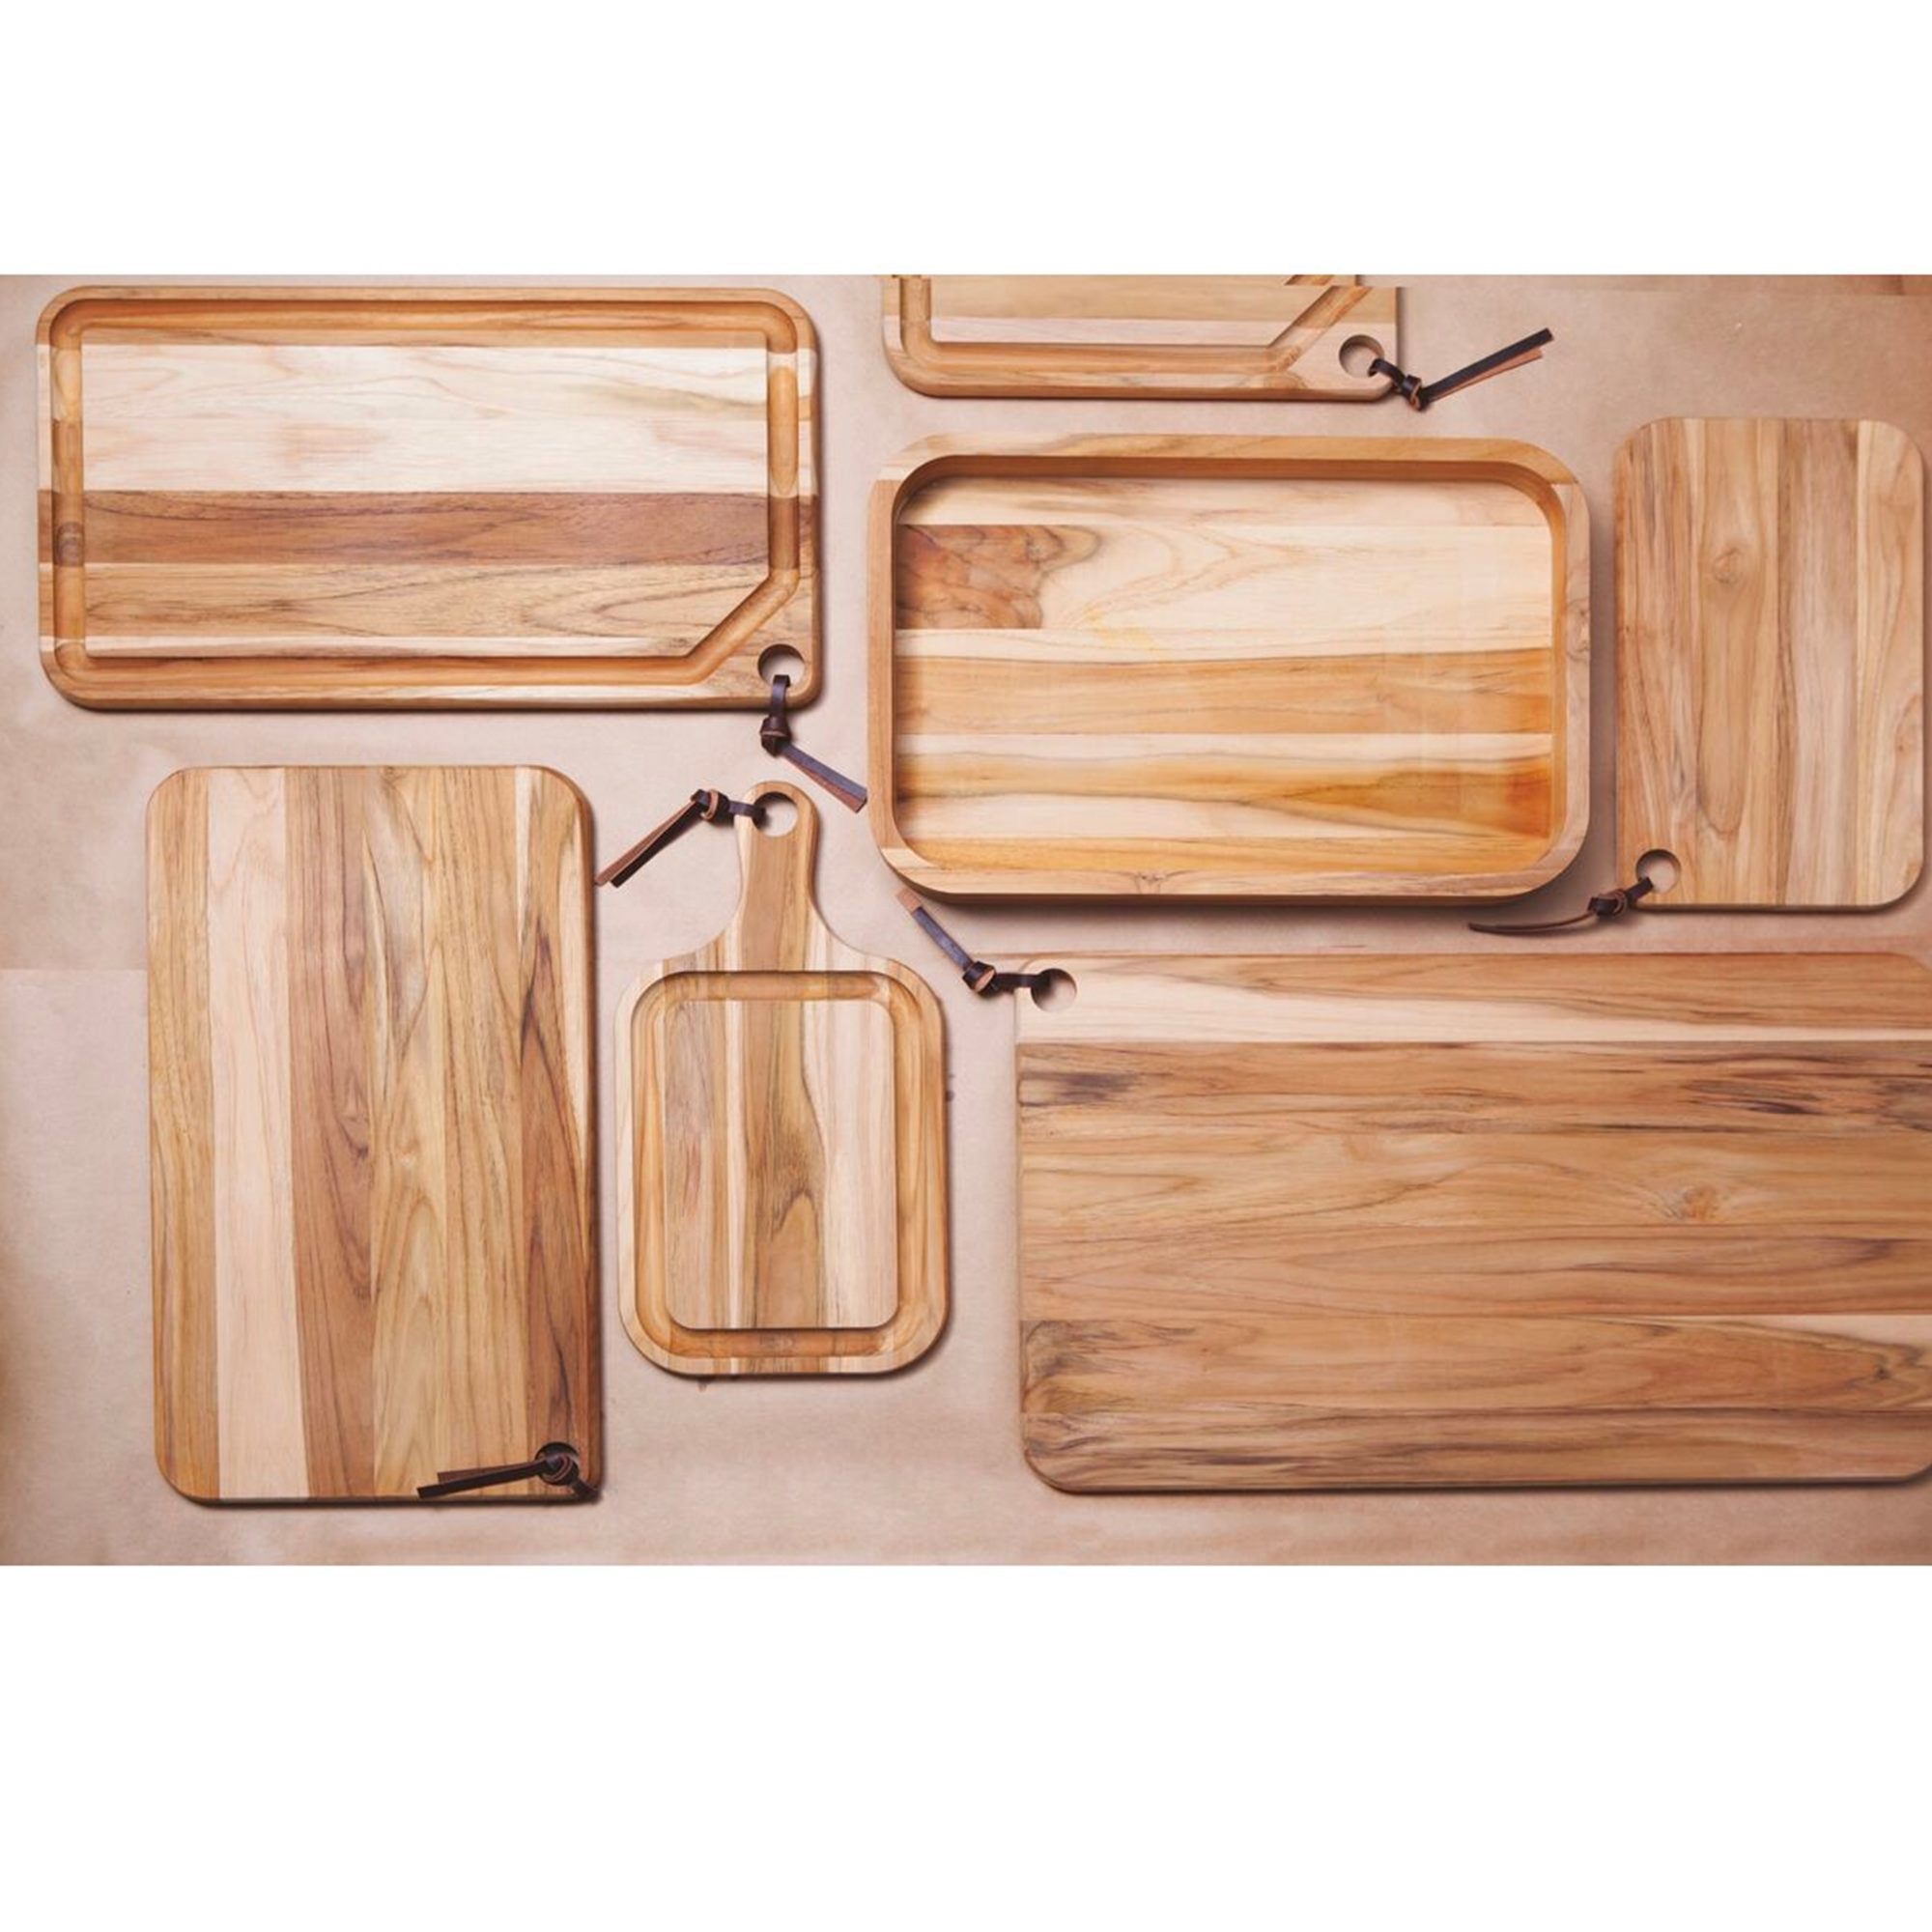 Tramontina Small Teak Wood Carving Board 33x20cm Image 2